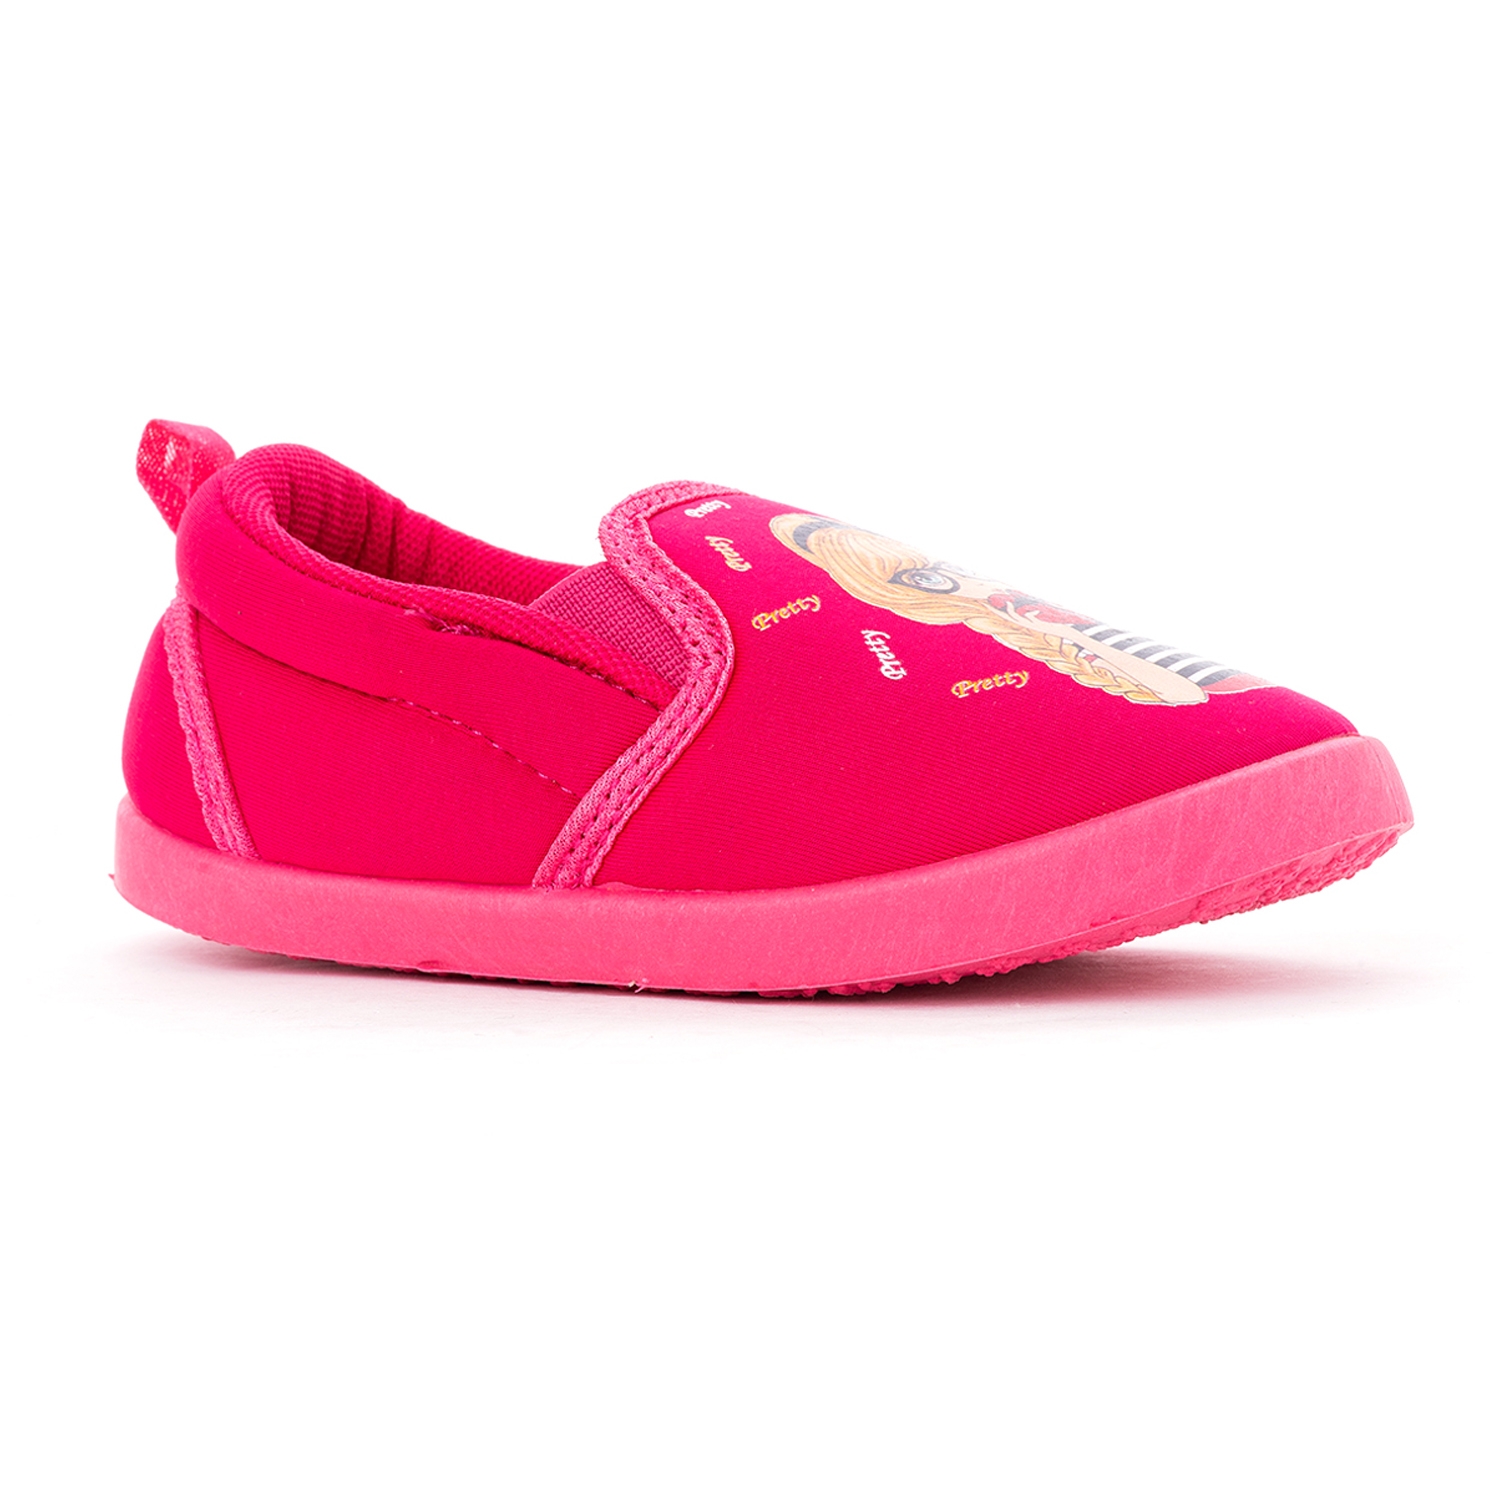 Khadim | Bonito Pink Slip On Casual Shoe for Girls